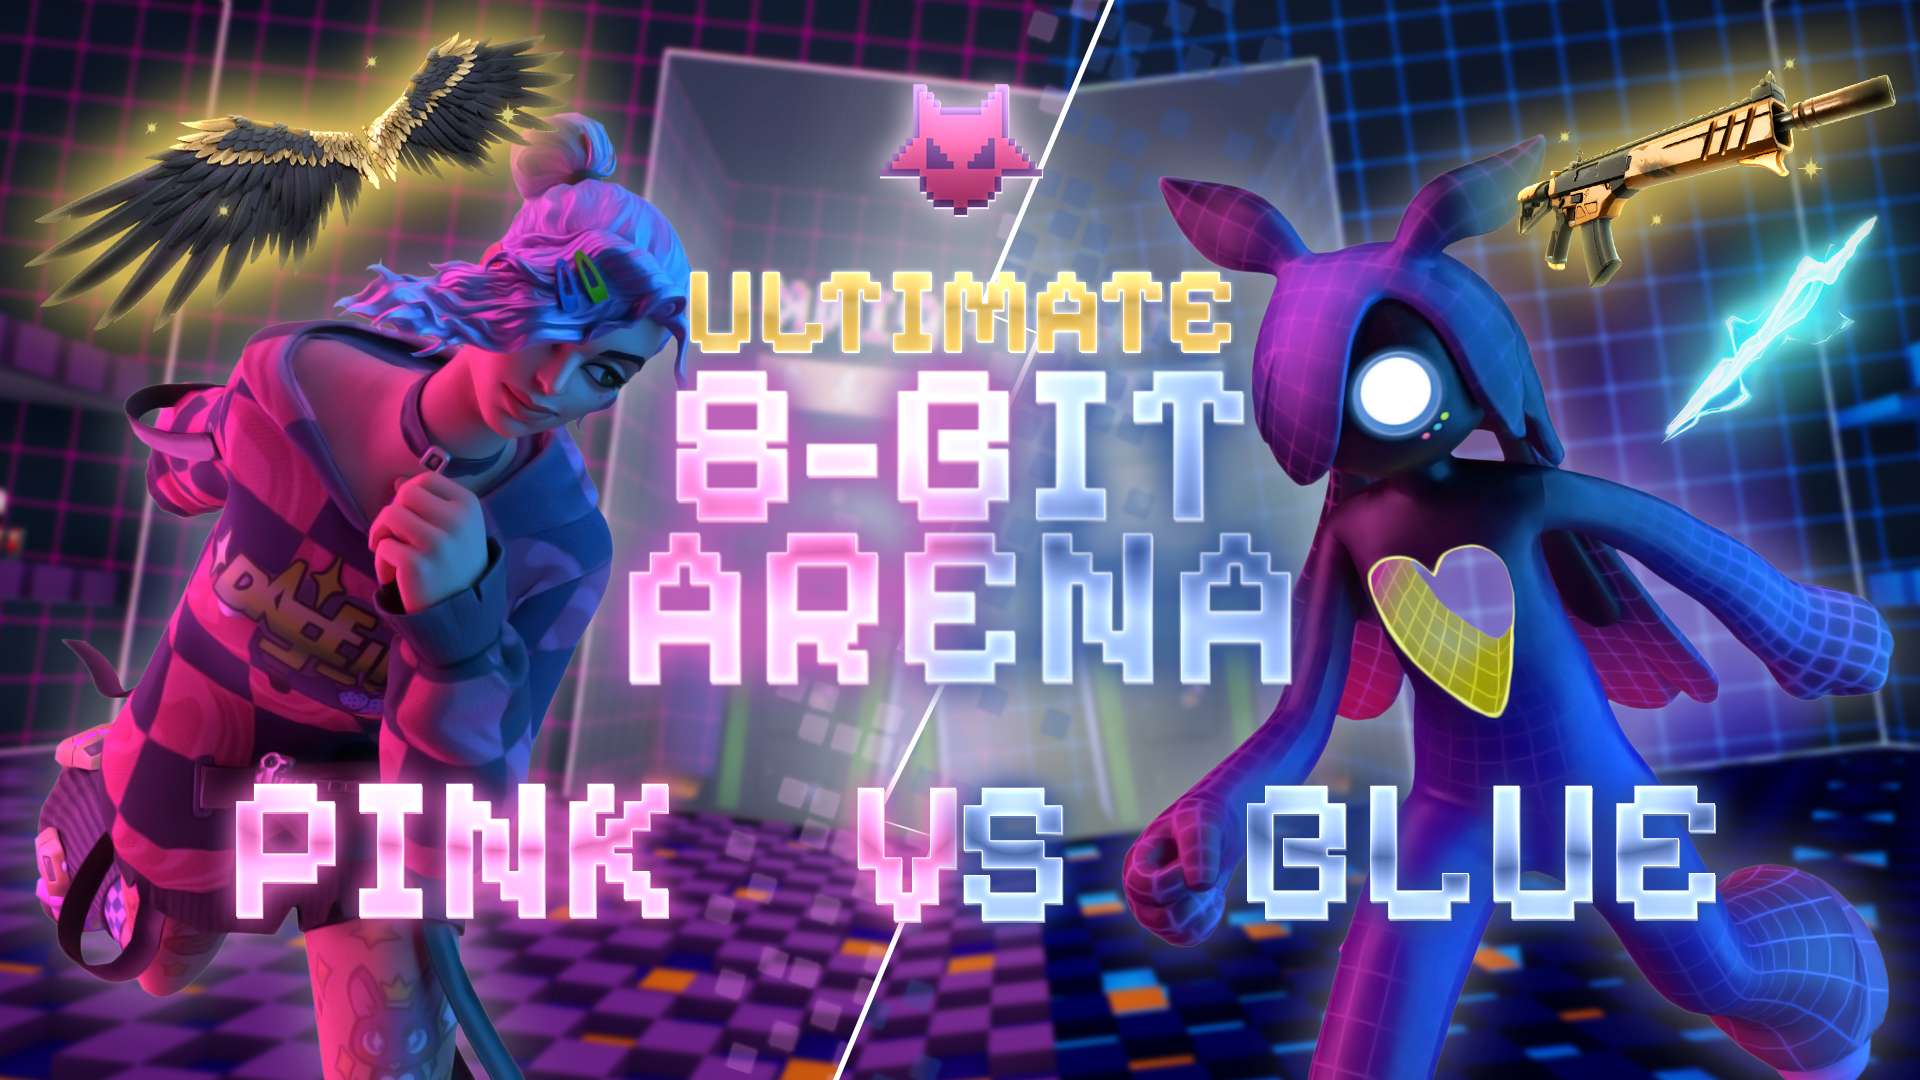 ULTIMATE 8-Bit Arena - Pink VS Blue